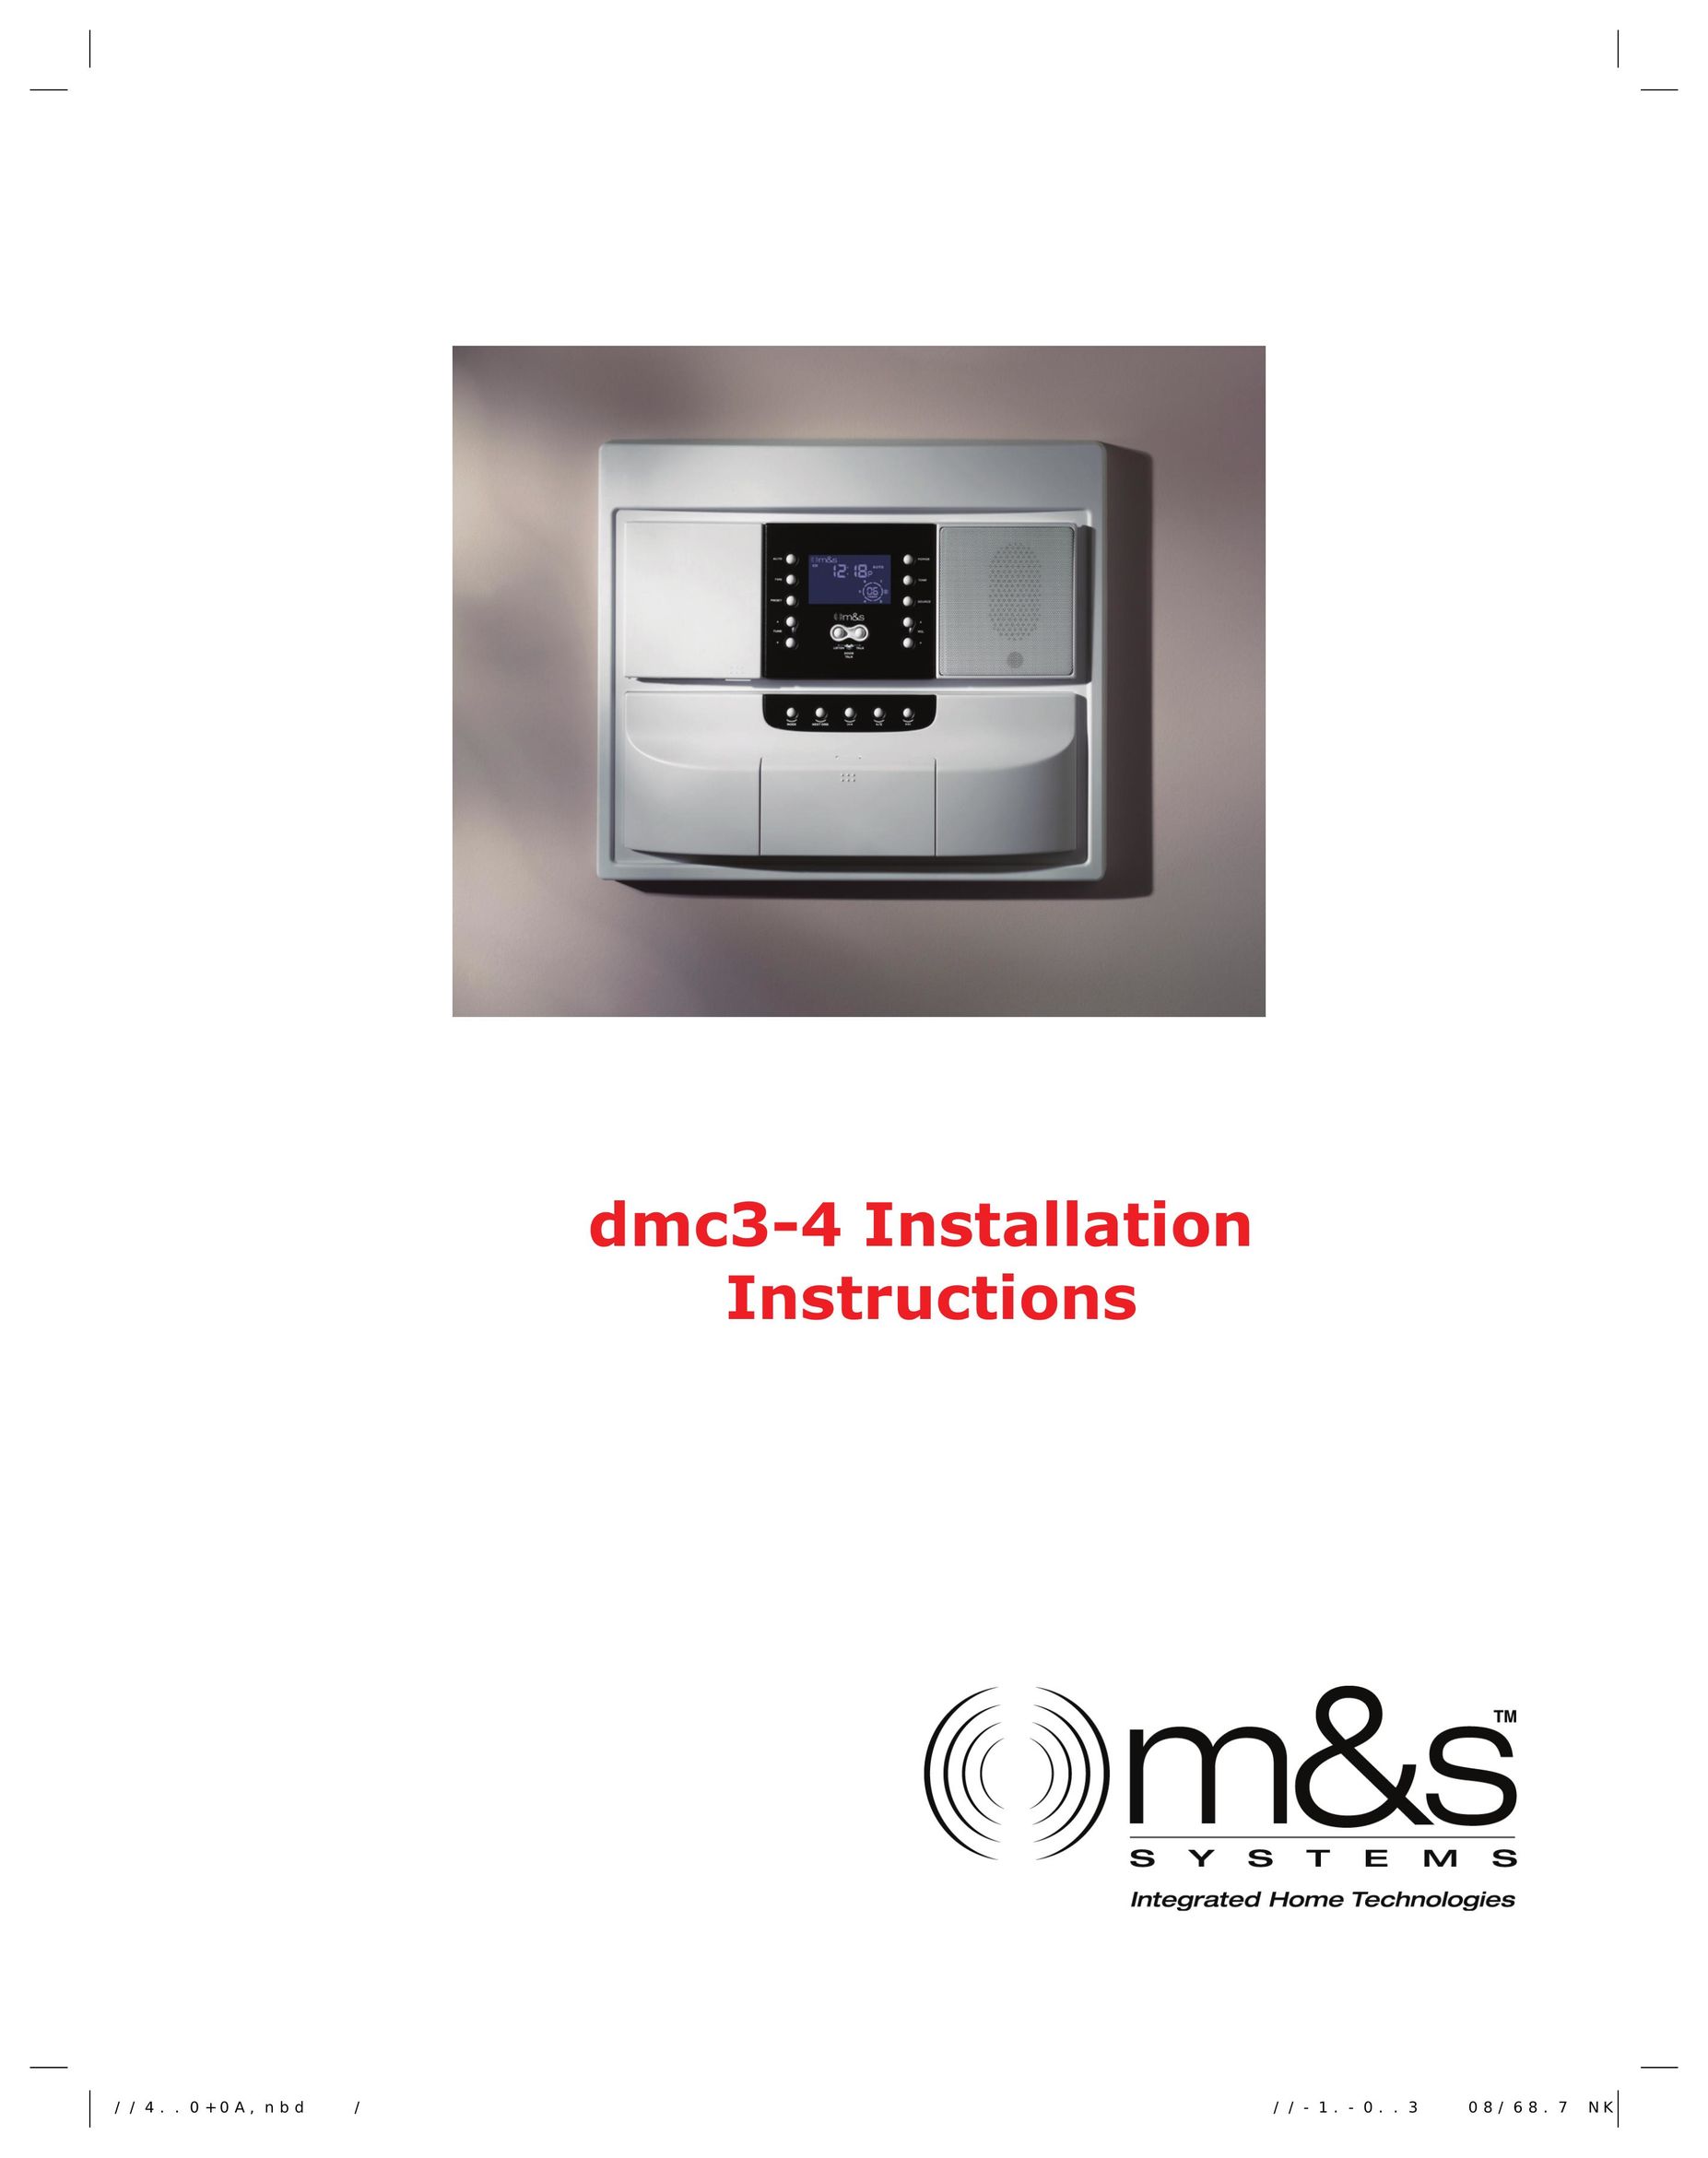 M&S Systems DMC3-4 Intercom System User Manual